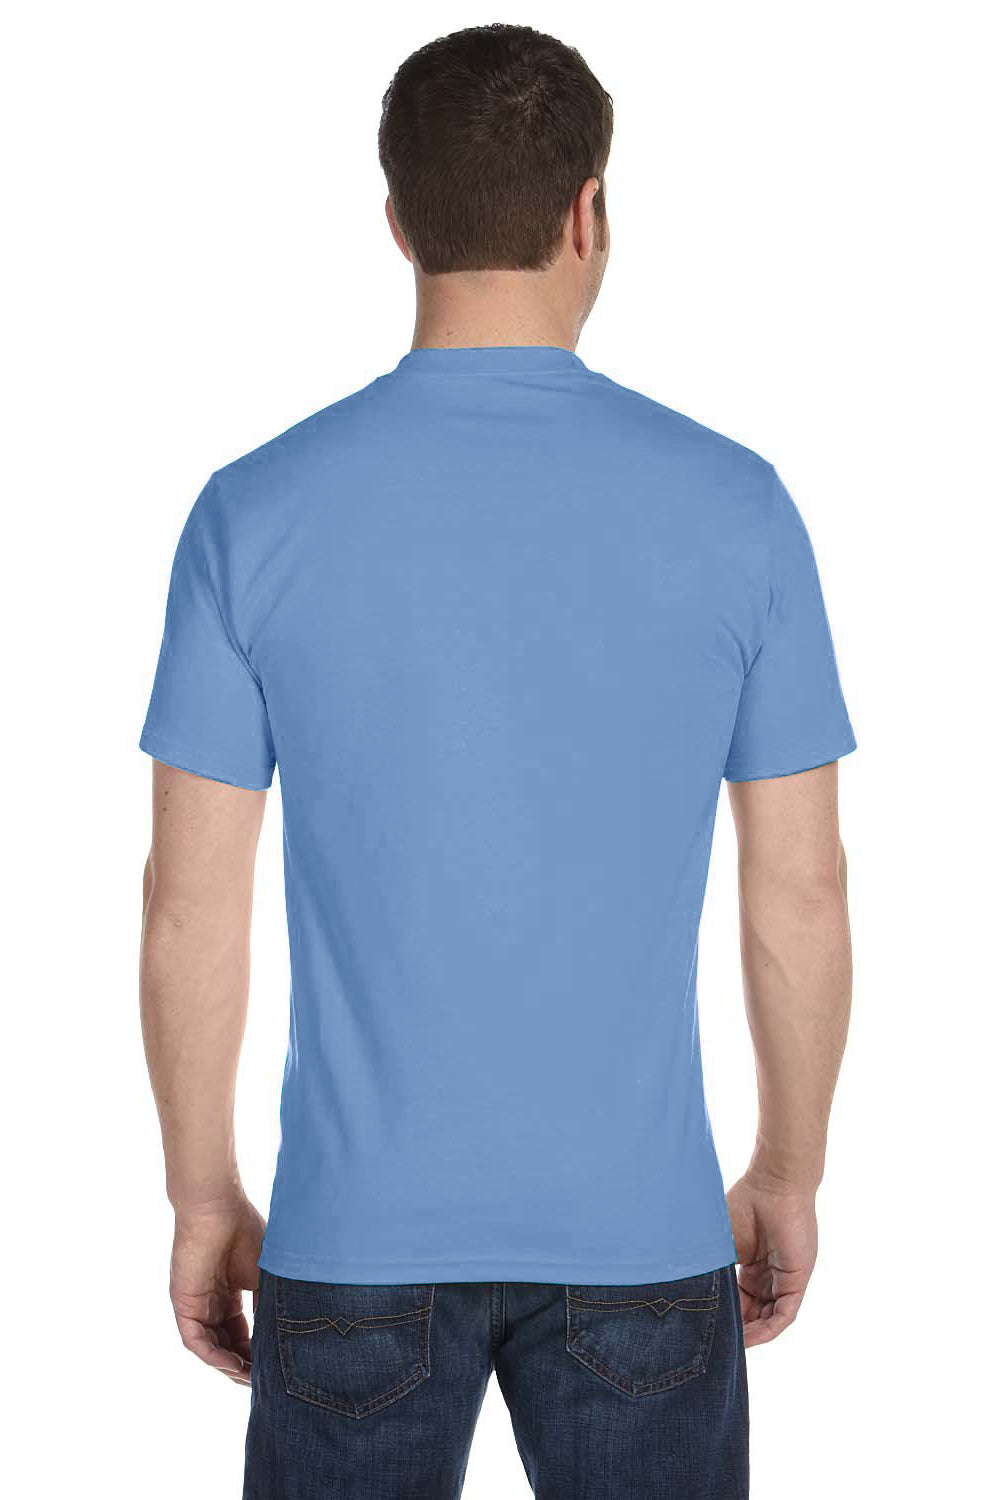 Gildan G800 Mens DryBlend Moisture Wicking Short Sleeve Crewneck T-Shirt Carolina Blue Back